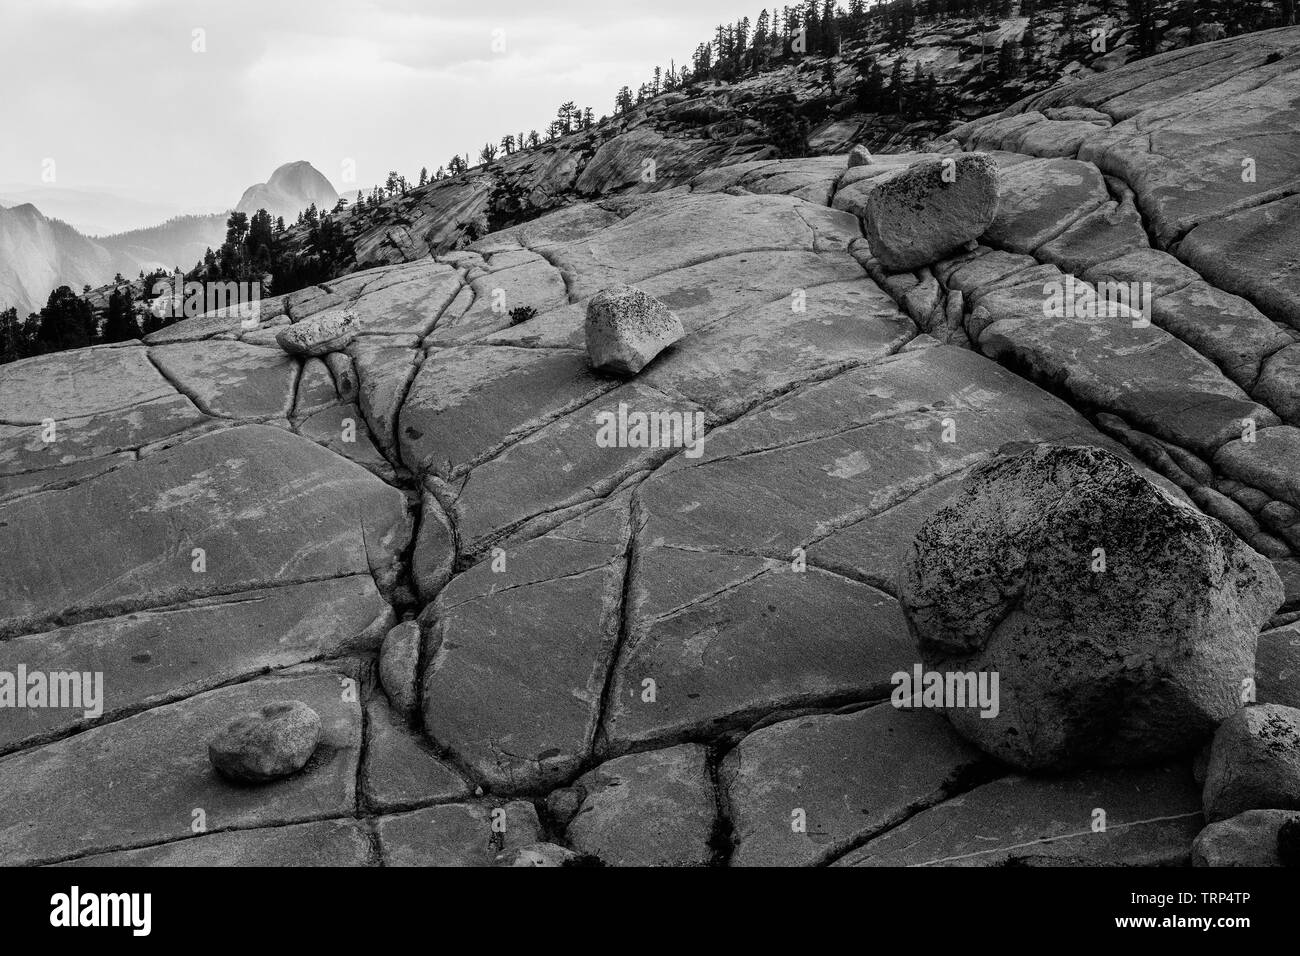 Tioga Pass Road,California, Lee Vining,Yosemite-Nationalpark,montañas,árbol,pino, piedras,Valle,Landschaftsaufnahme,Schwarz/Weiss Foto de stock